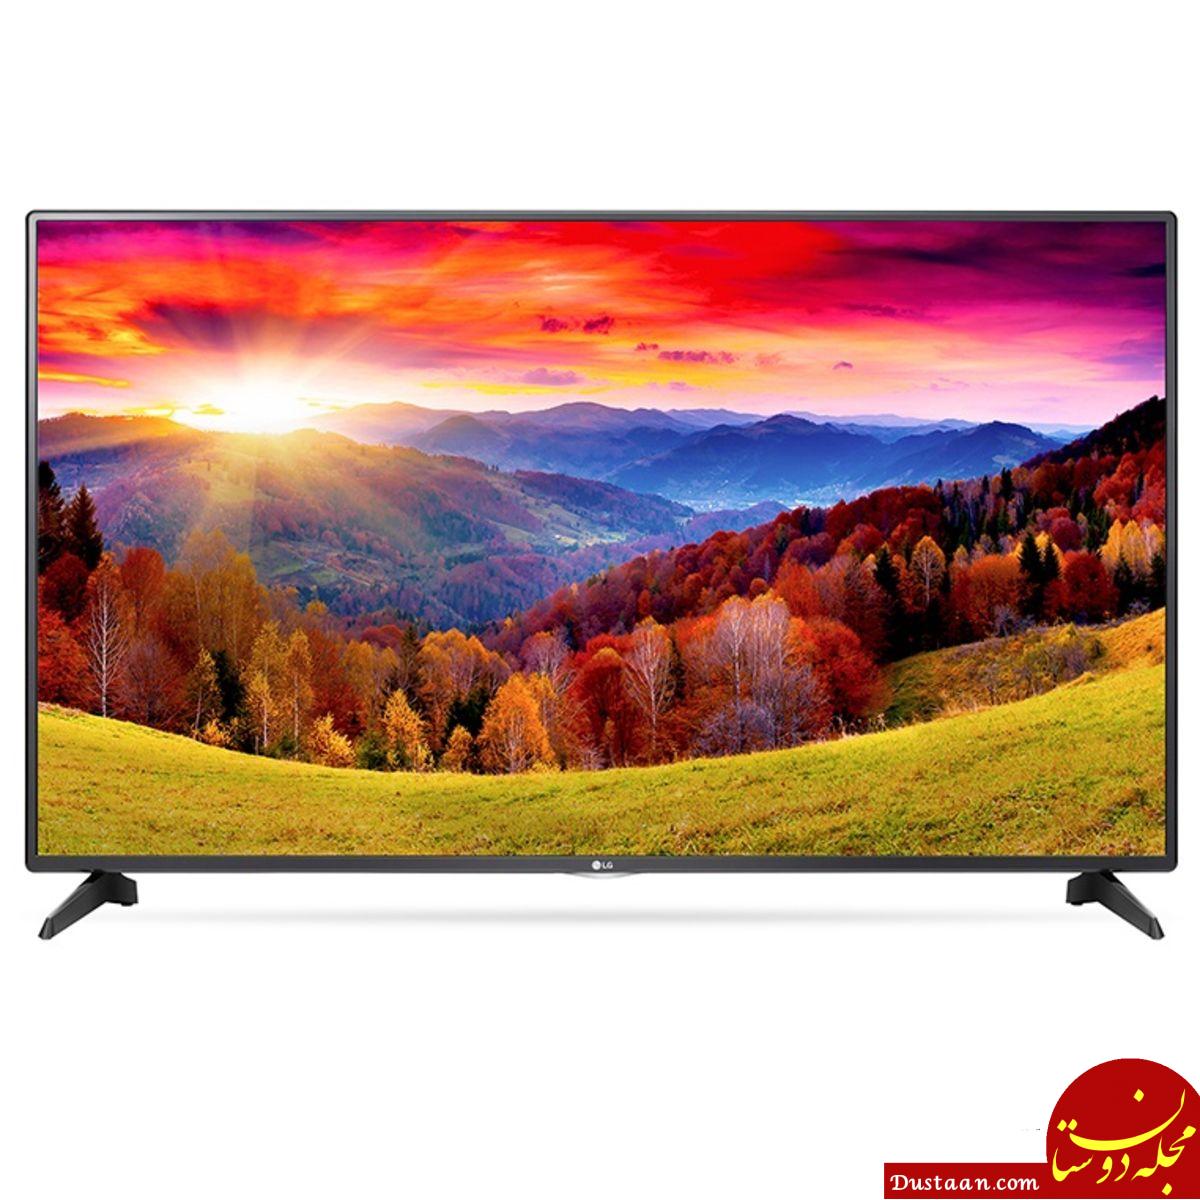 www.dustaan.com قیمت انواع تلویزیون در بازار های تهران (LG SAMSUNG SONY)